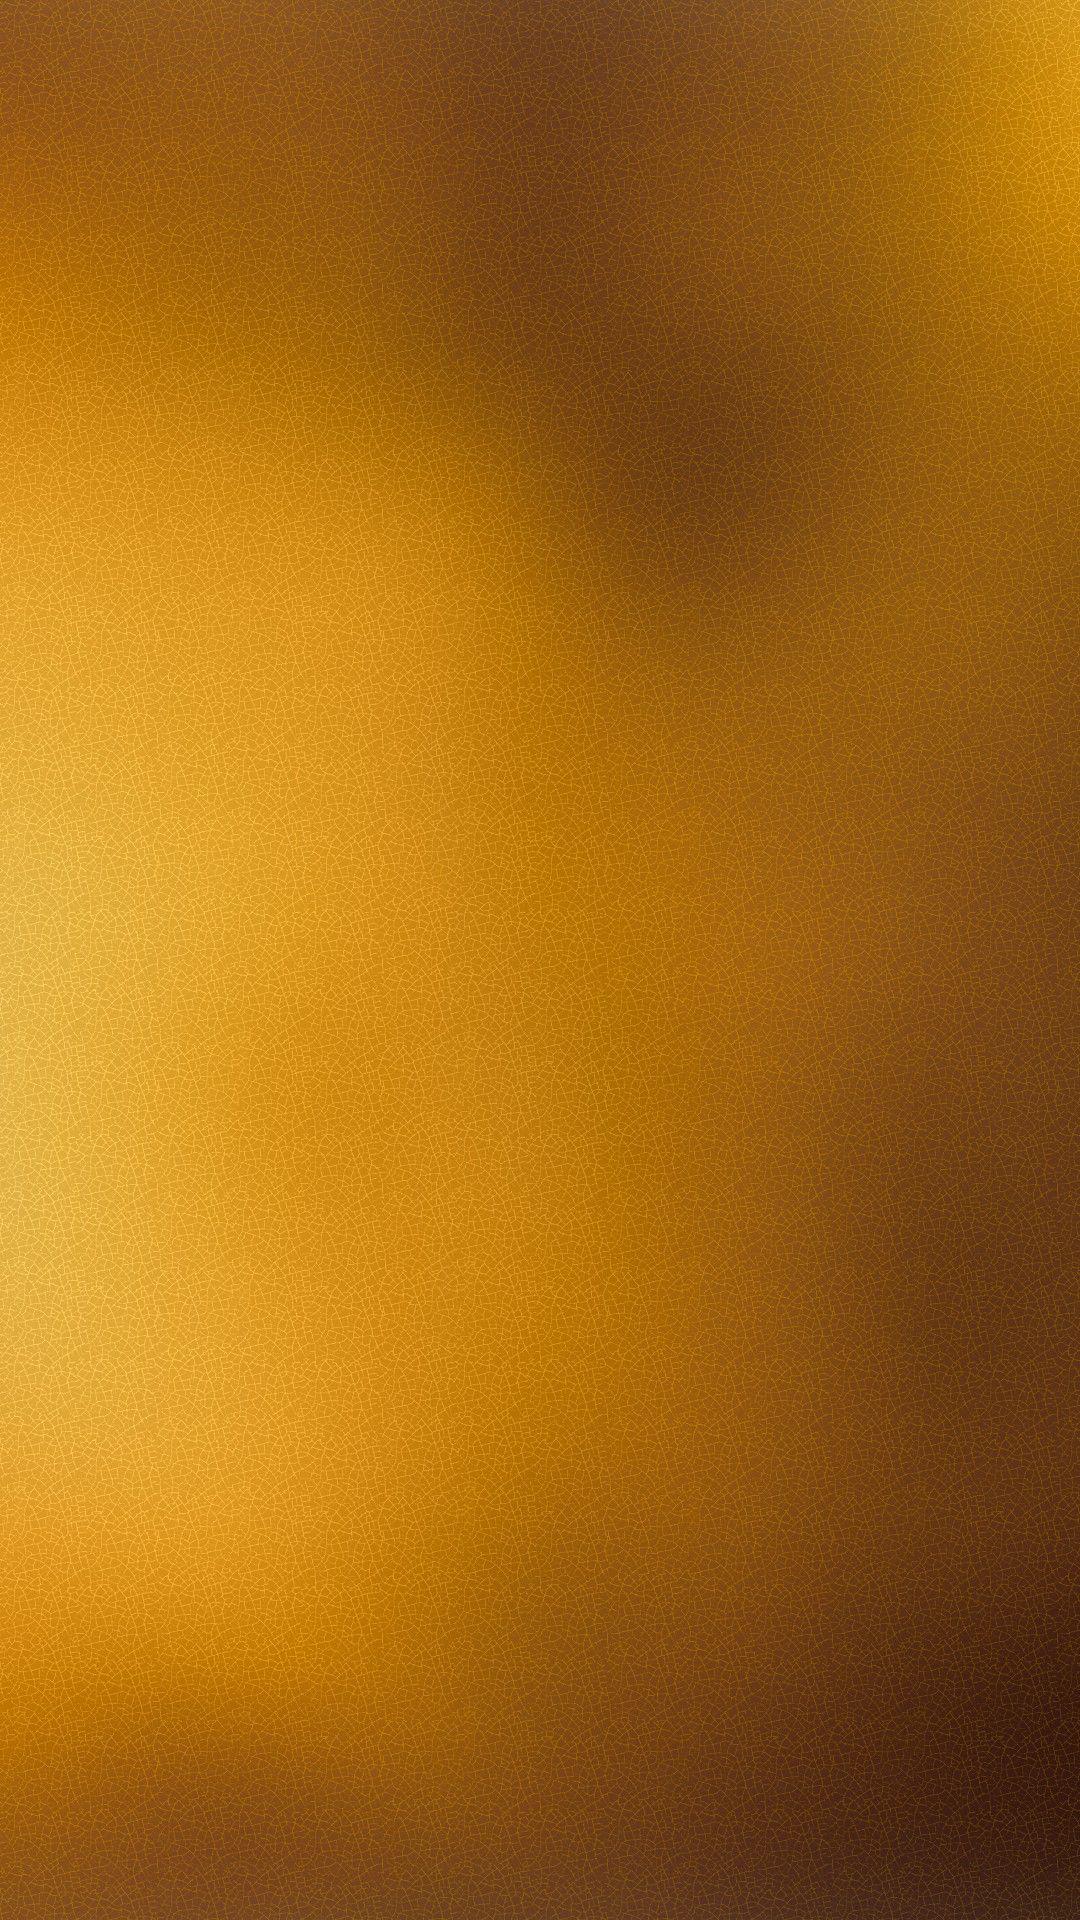 iPhone Wallpaper Plain Gold. Gold wallpaper iphone, iPhone